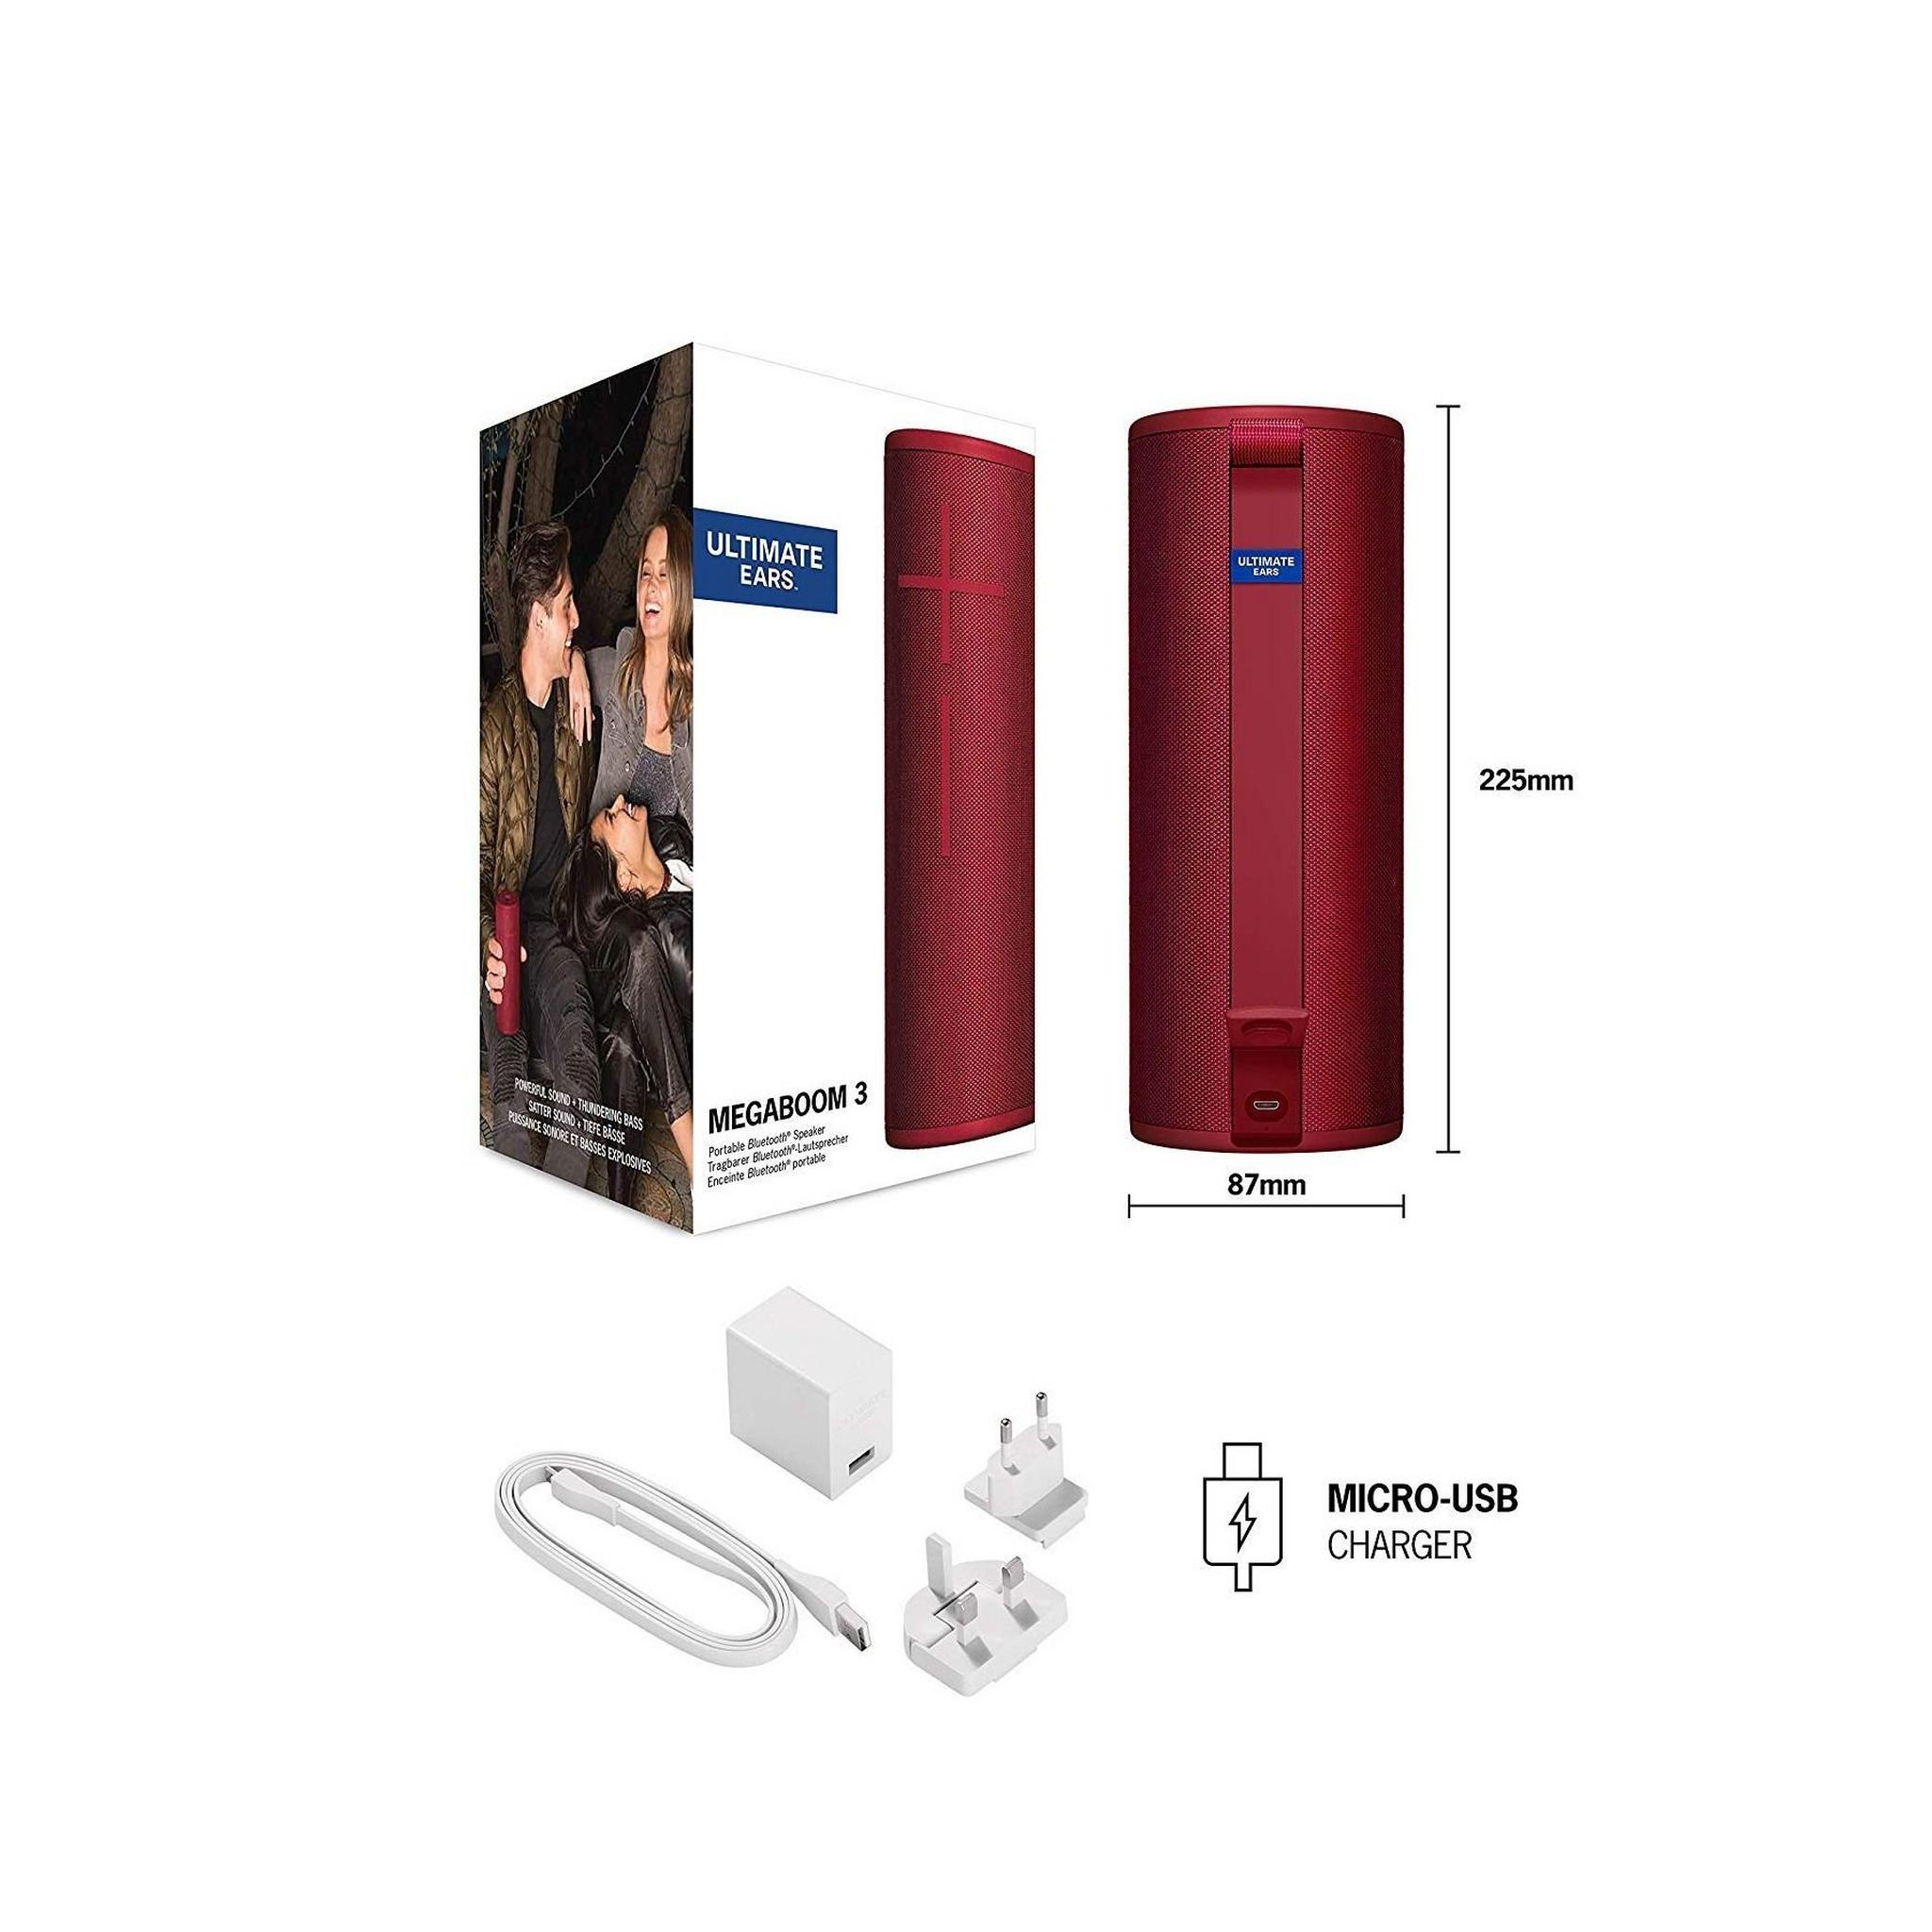 Ultimate Ears MegaBoom 3 Wireless Portable Speaker (984-001406) - Red